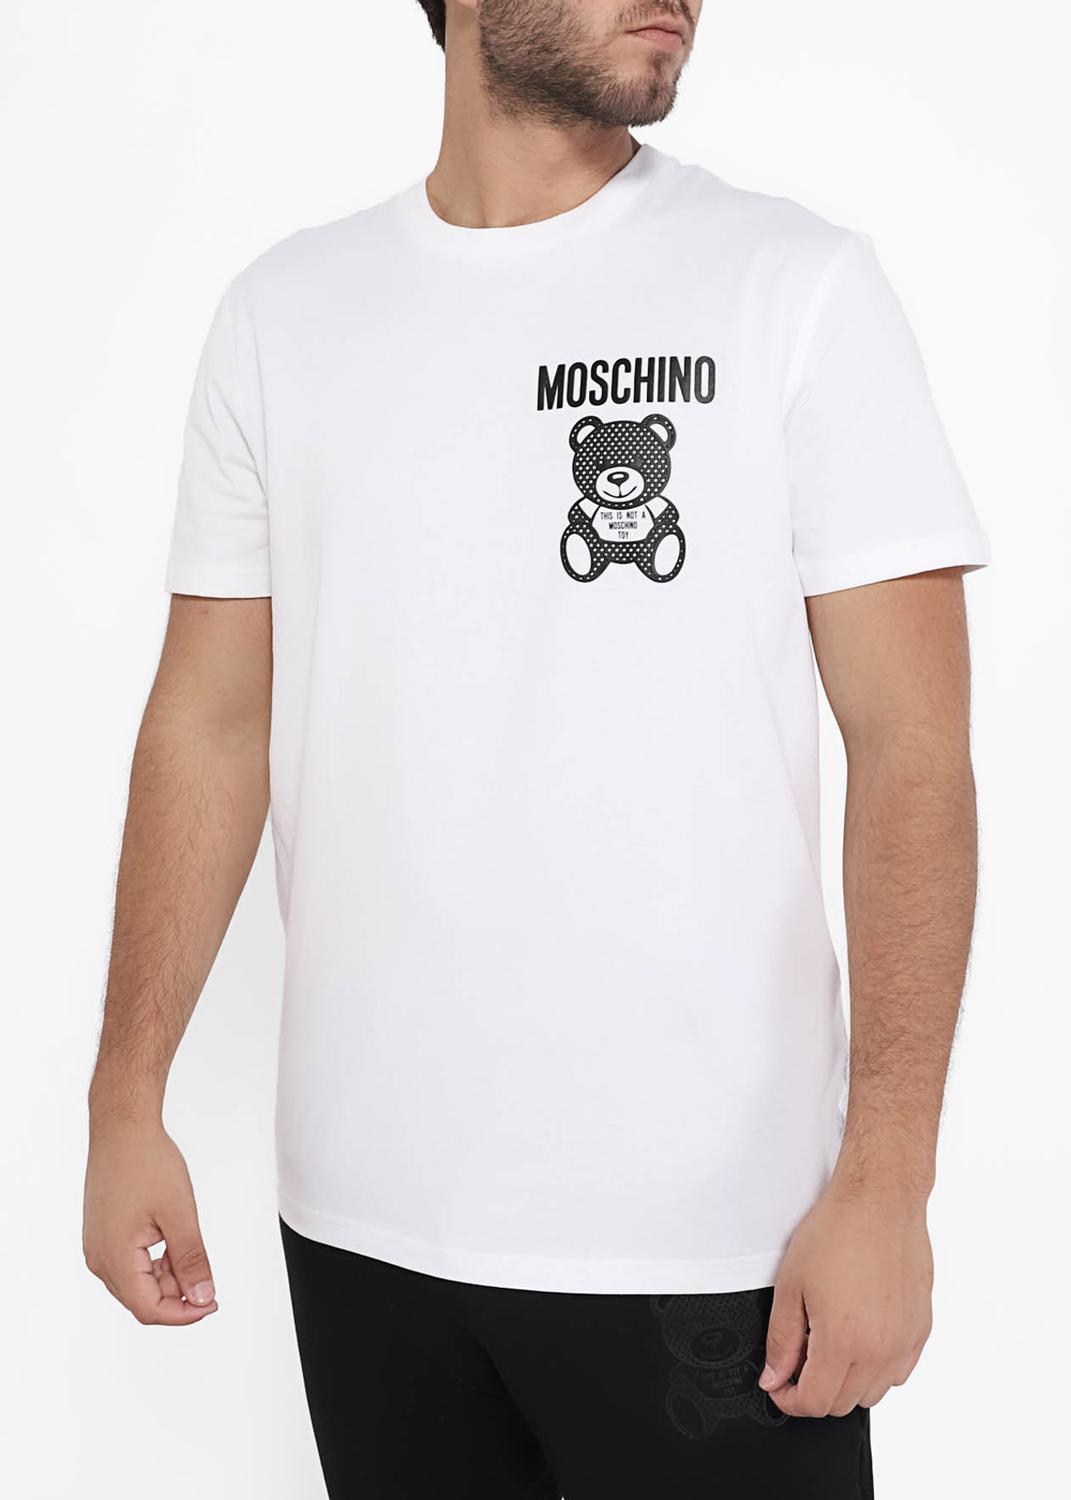 Moschino T-shirt MSC-V0729